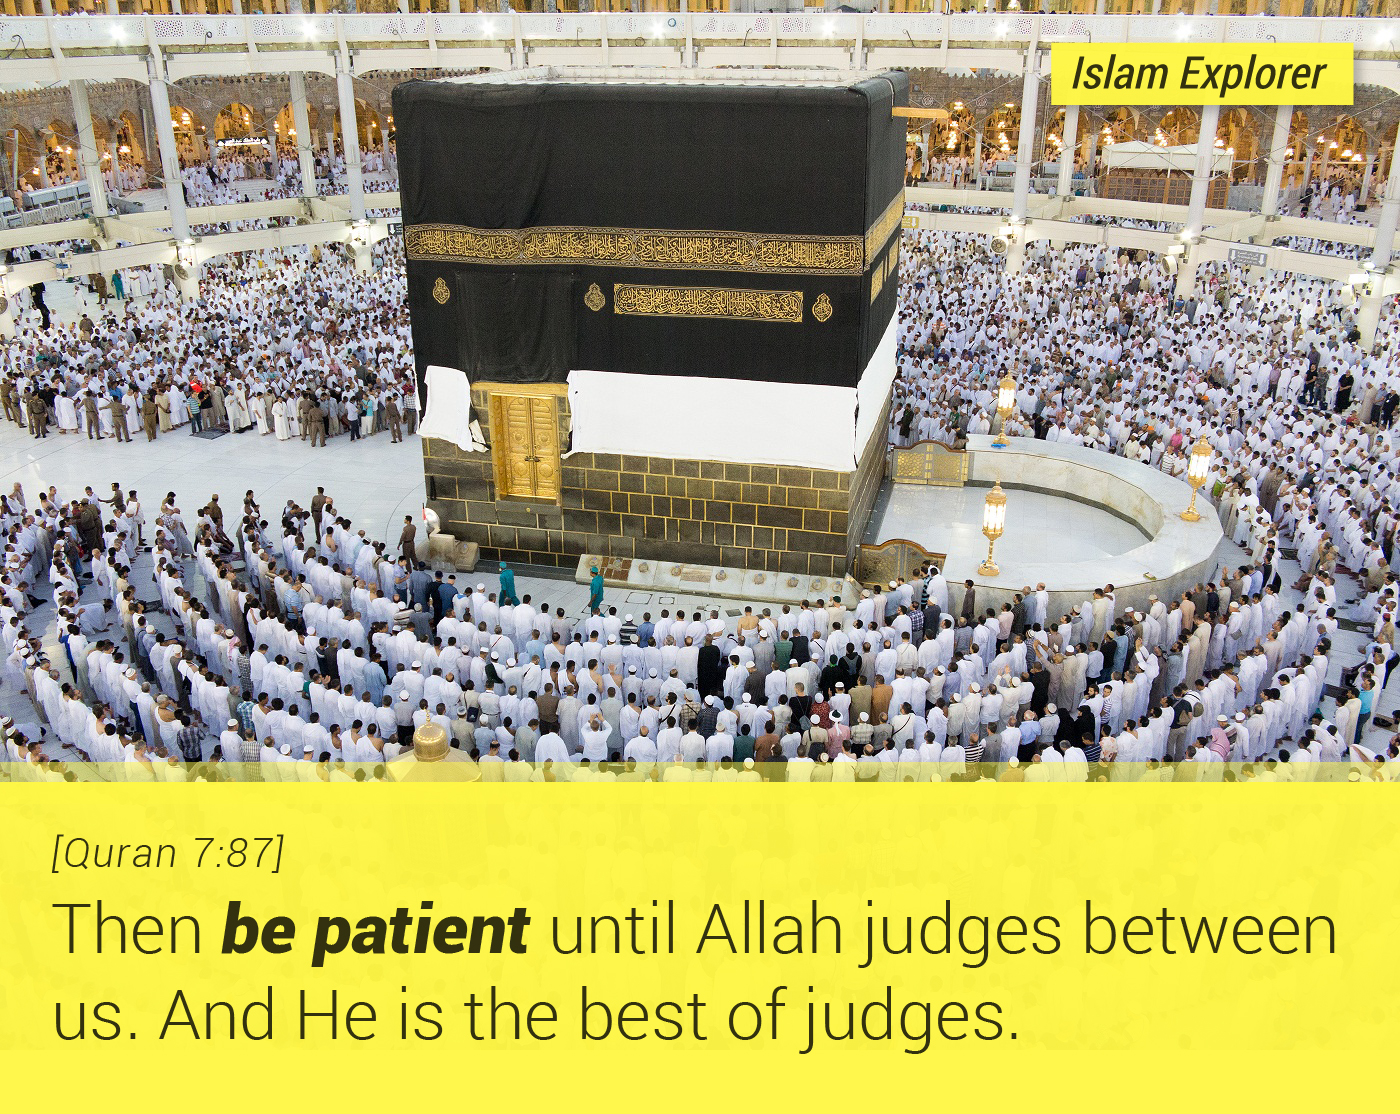 Then be patient until Allah judges between us.